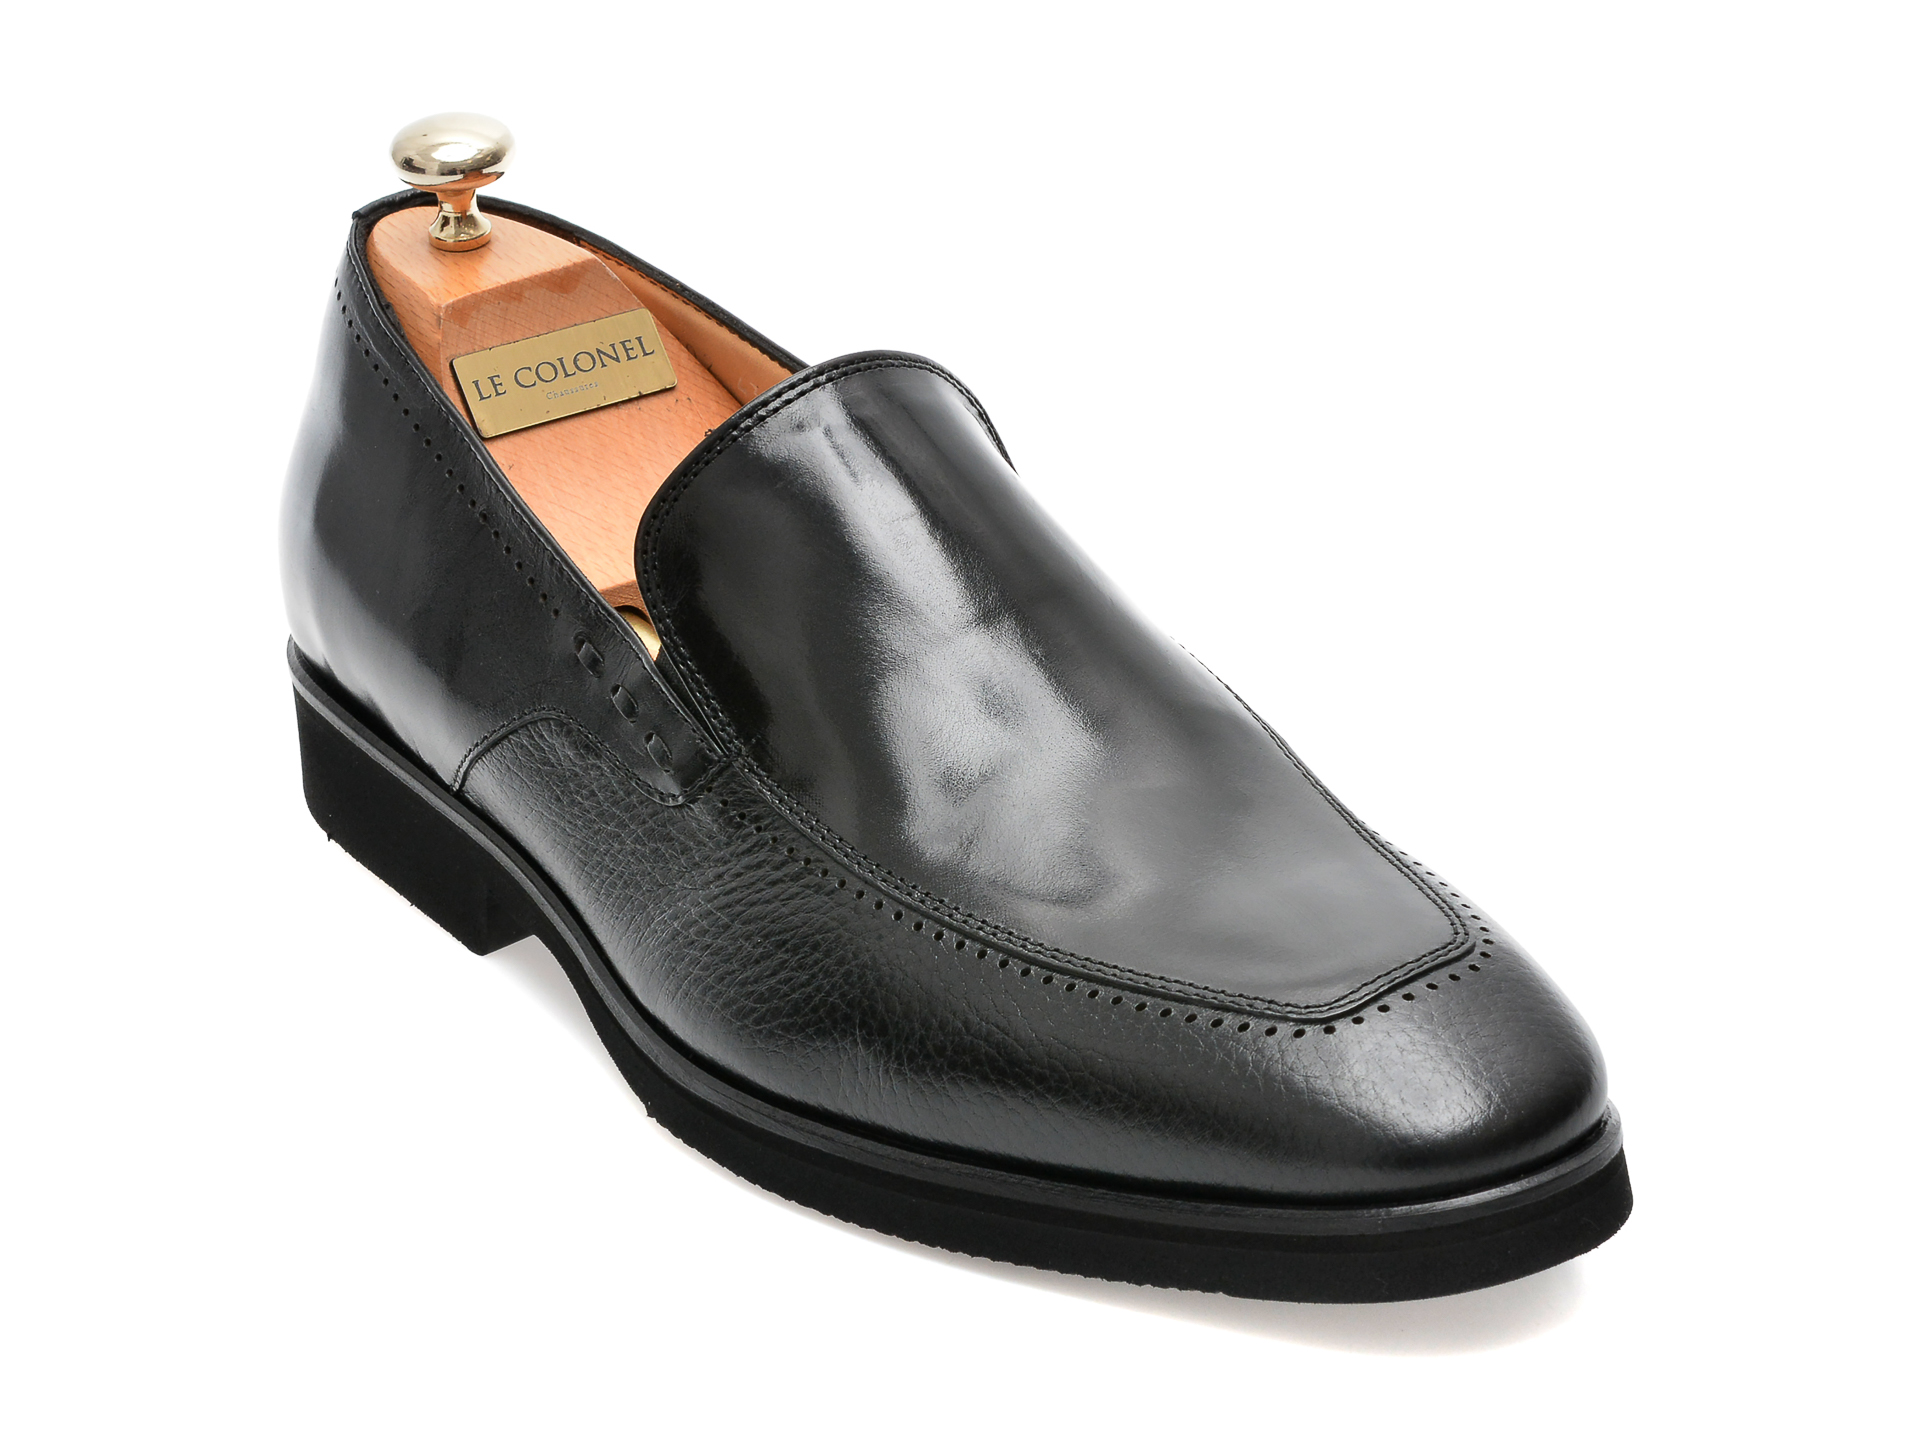 Pantofi LE COLONEL negri, 48702, din piele naturala /barbati/pantofi /barbati/pantofi